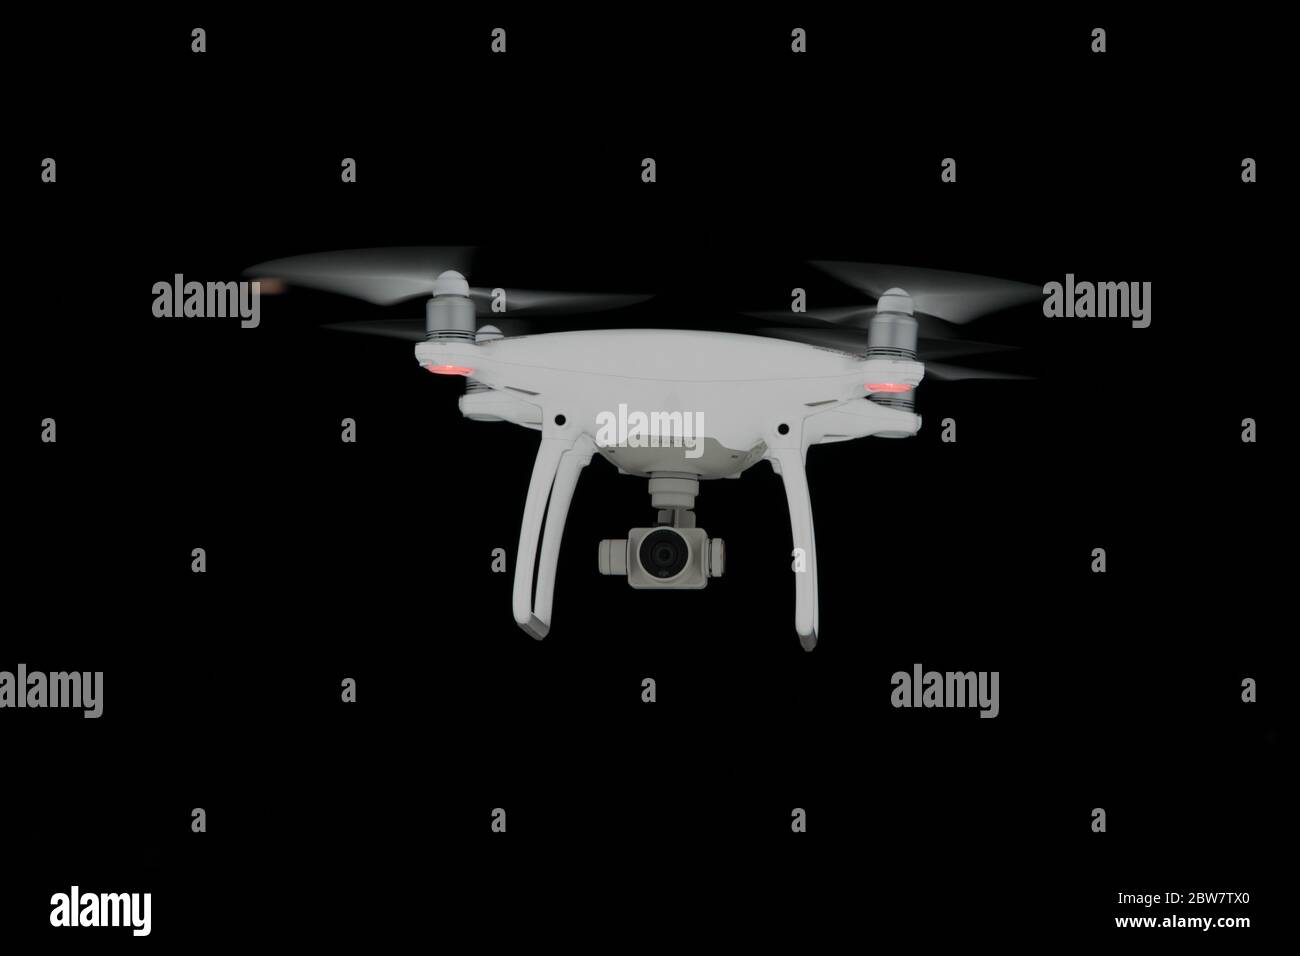 Drohne DJI Phantom 4 mit integrier, Gimbal-gelagerter Kamera fliegt Nachts  in der Luft - Flugdrohne Fotografía de stock - Alamy